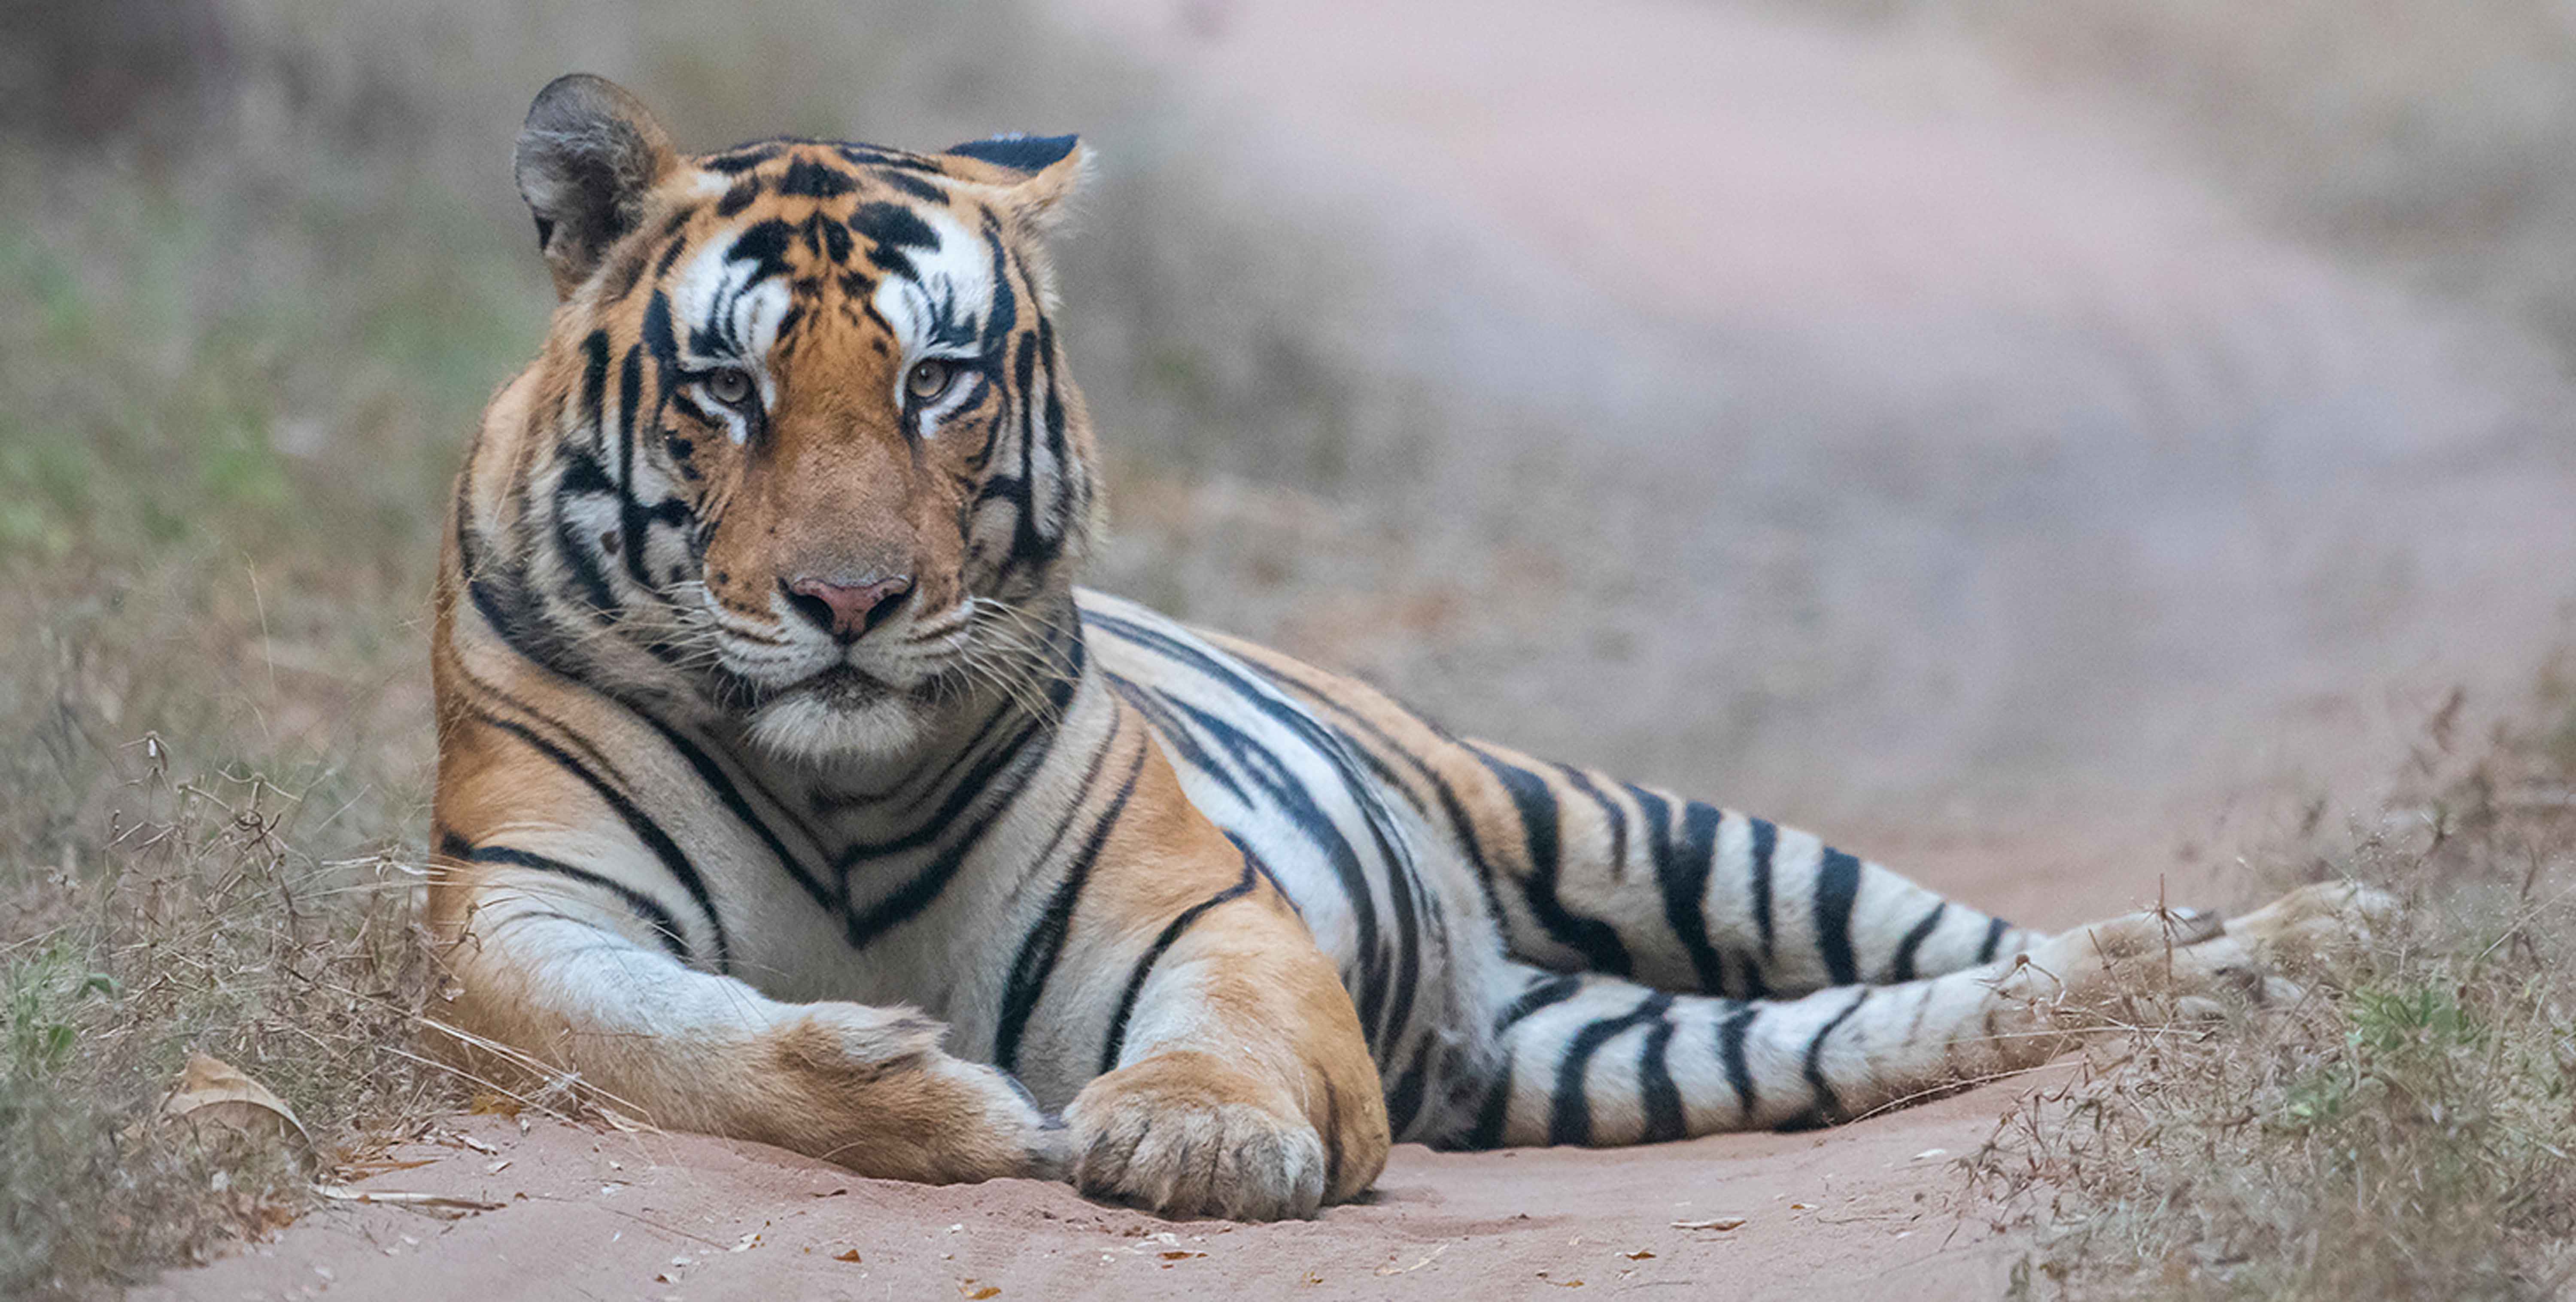 Tiger Safari in Bandhavgarh